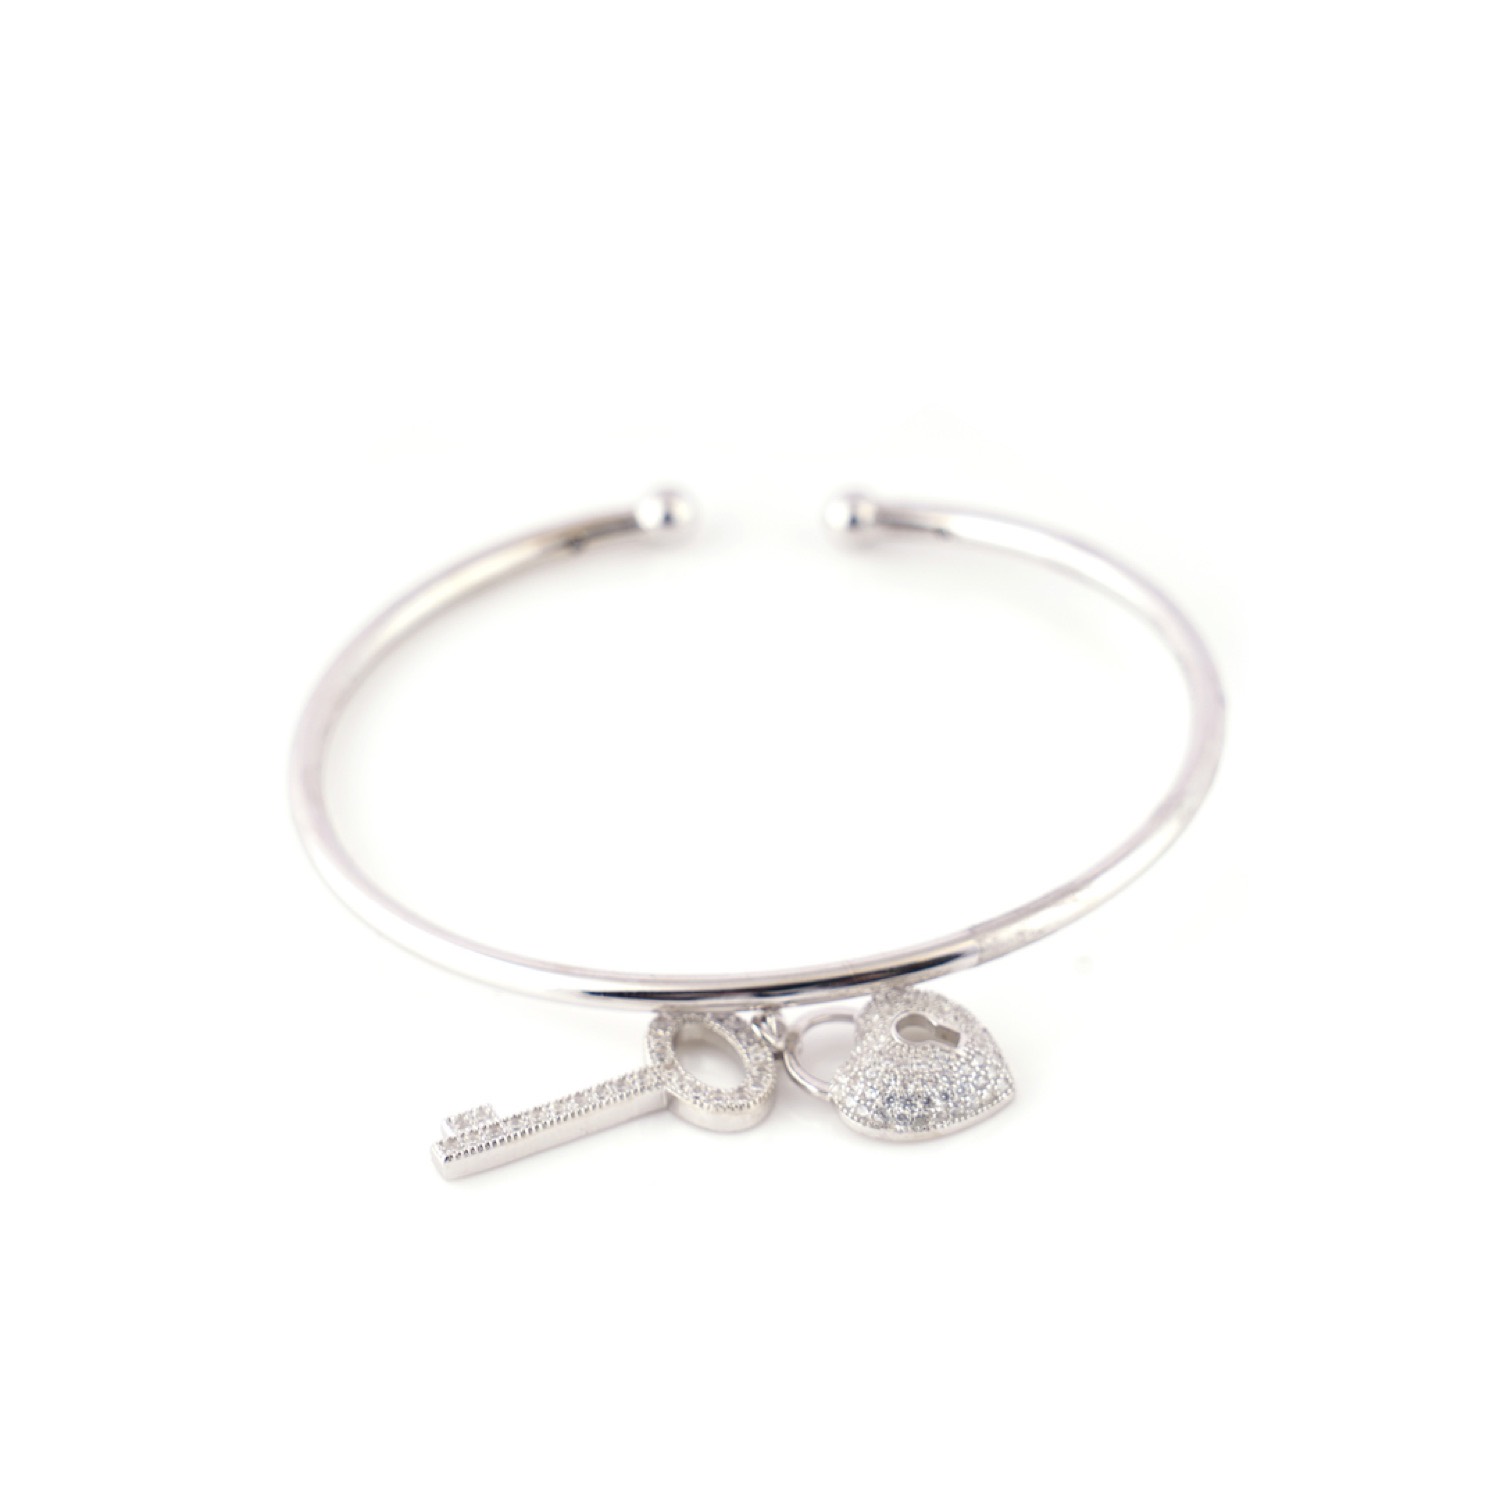 varam_bracelet_and_bangle_heart_lock_and_key_charm_open_cuff_silver_bracelet-1